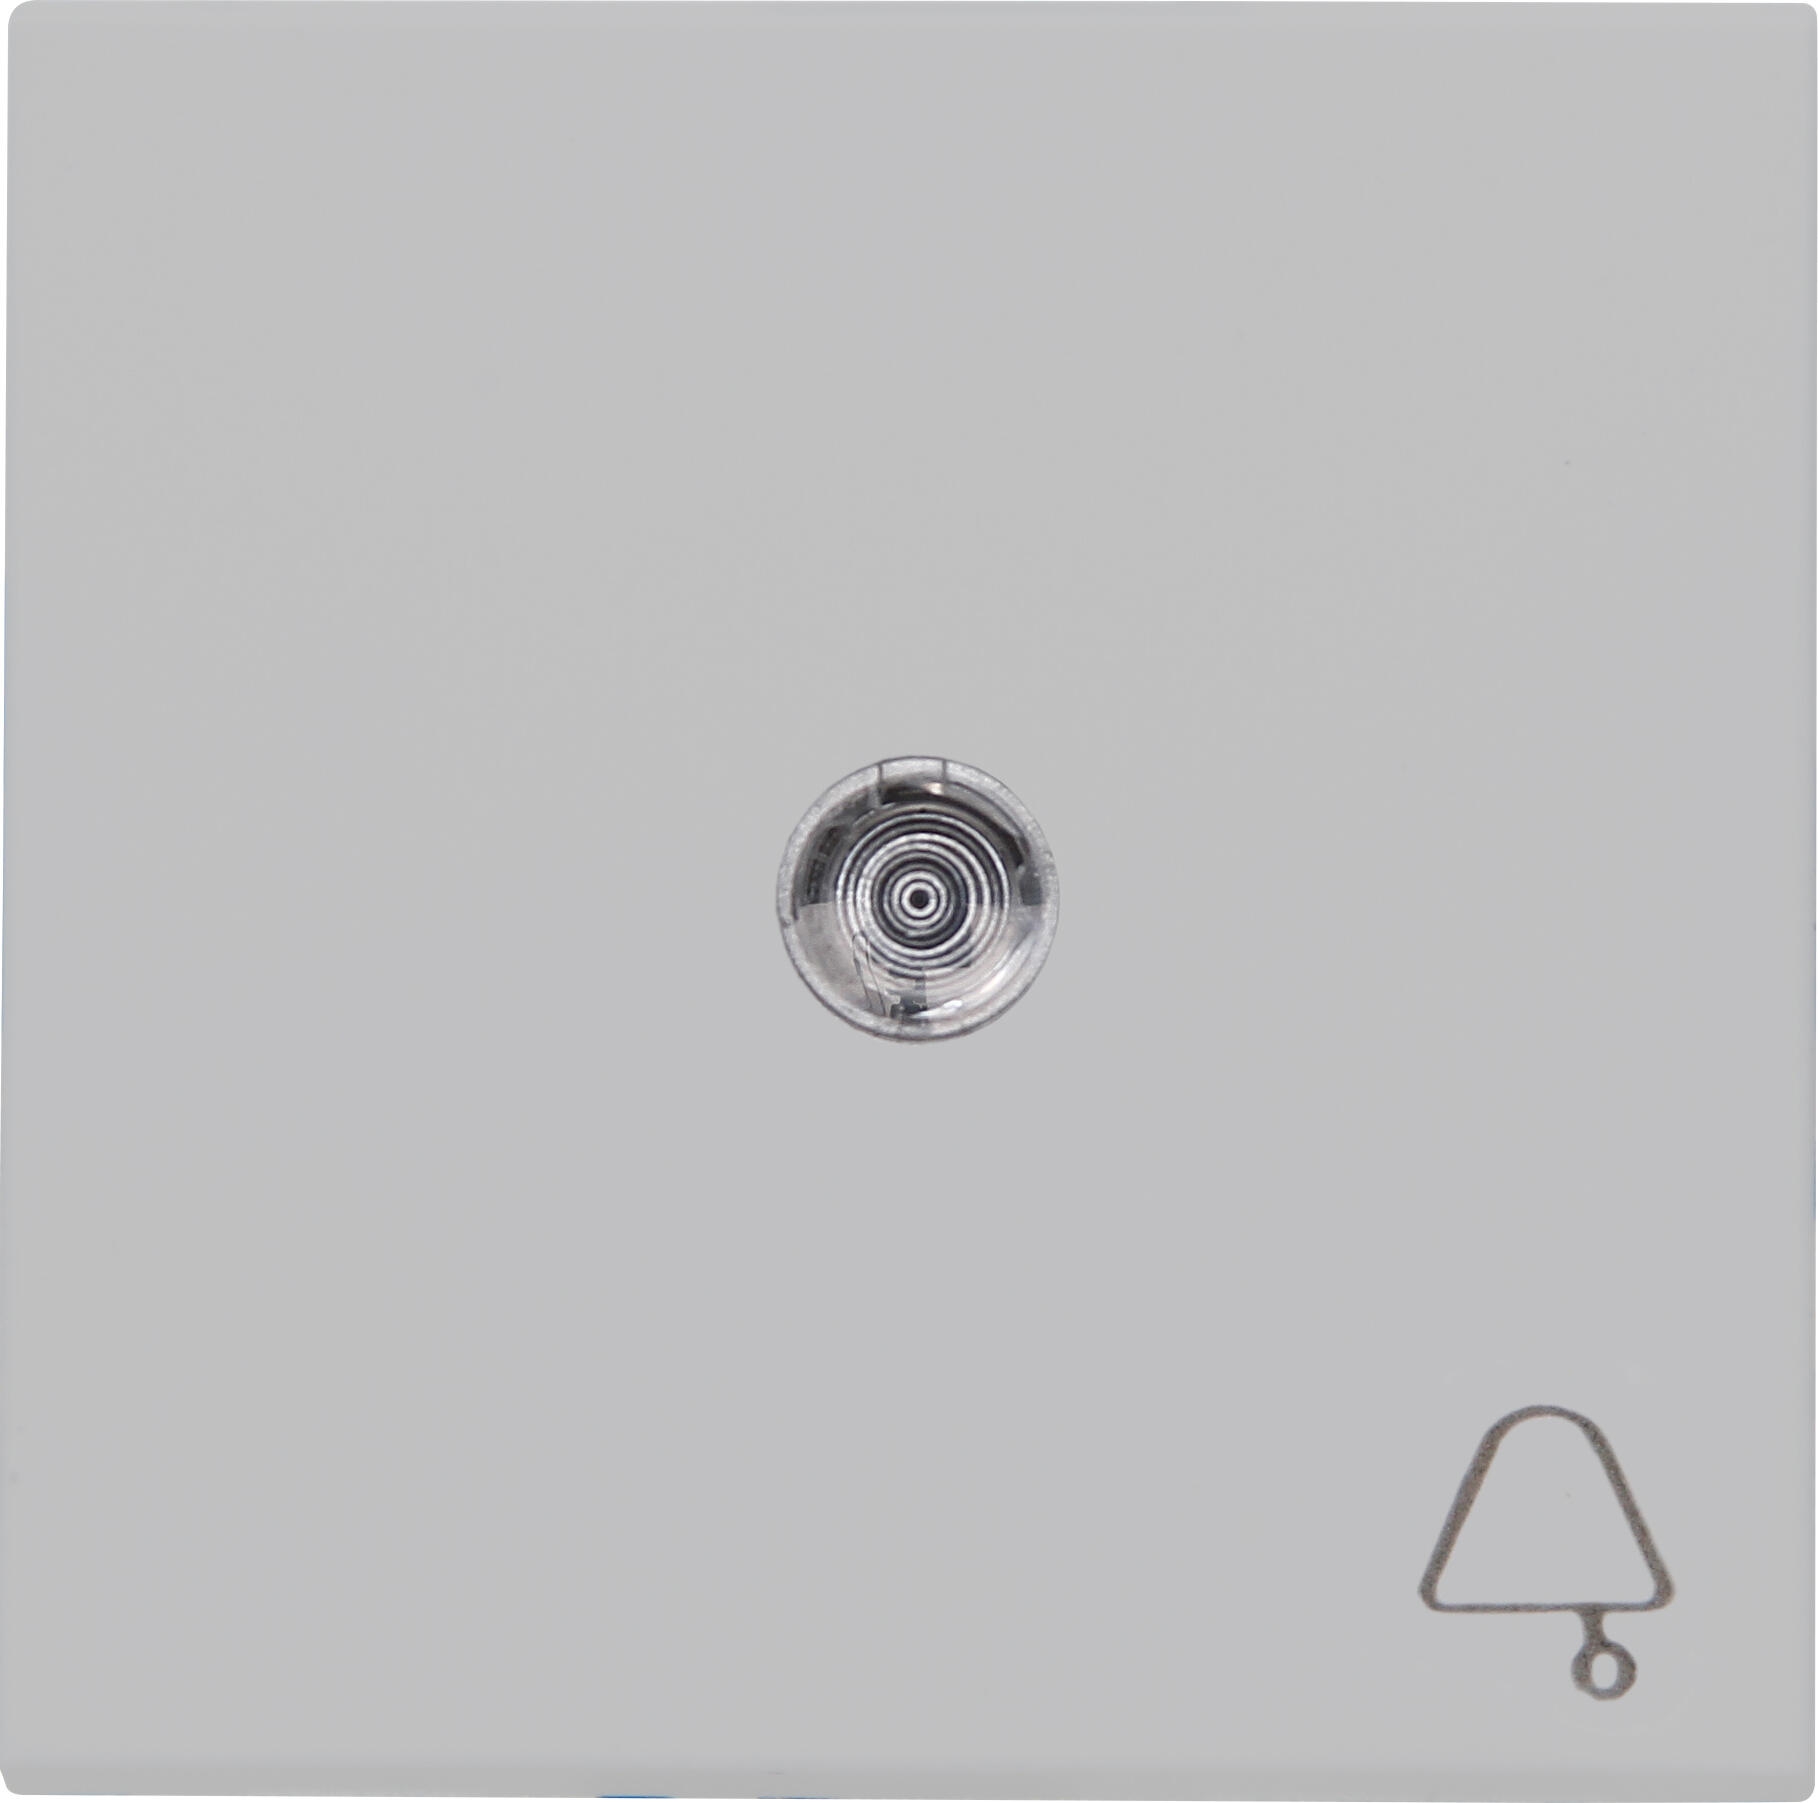 Kopp 490455007 HK07 - Flächenwippe mit Linse und Symbol "Glocke", Farbe: grau matt